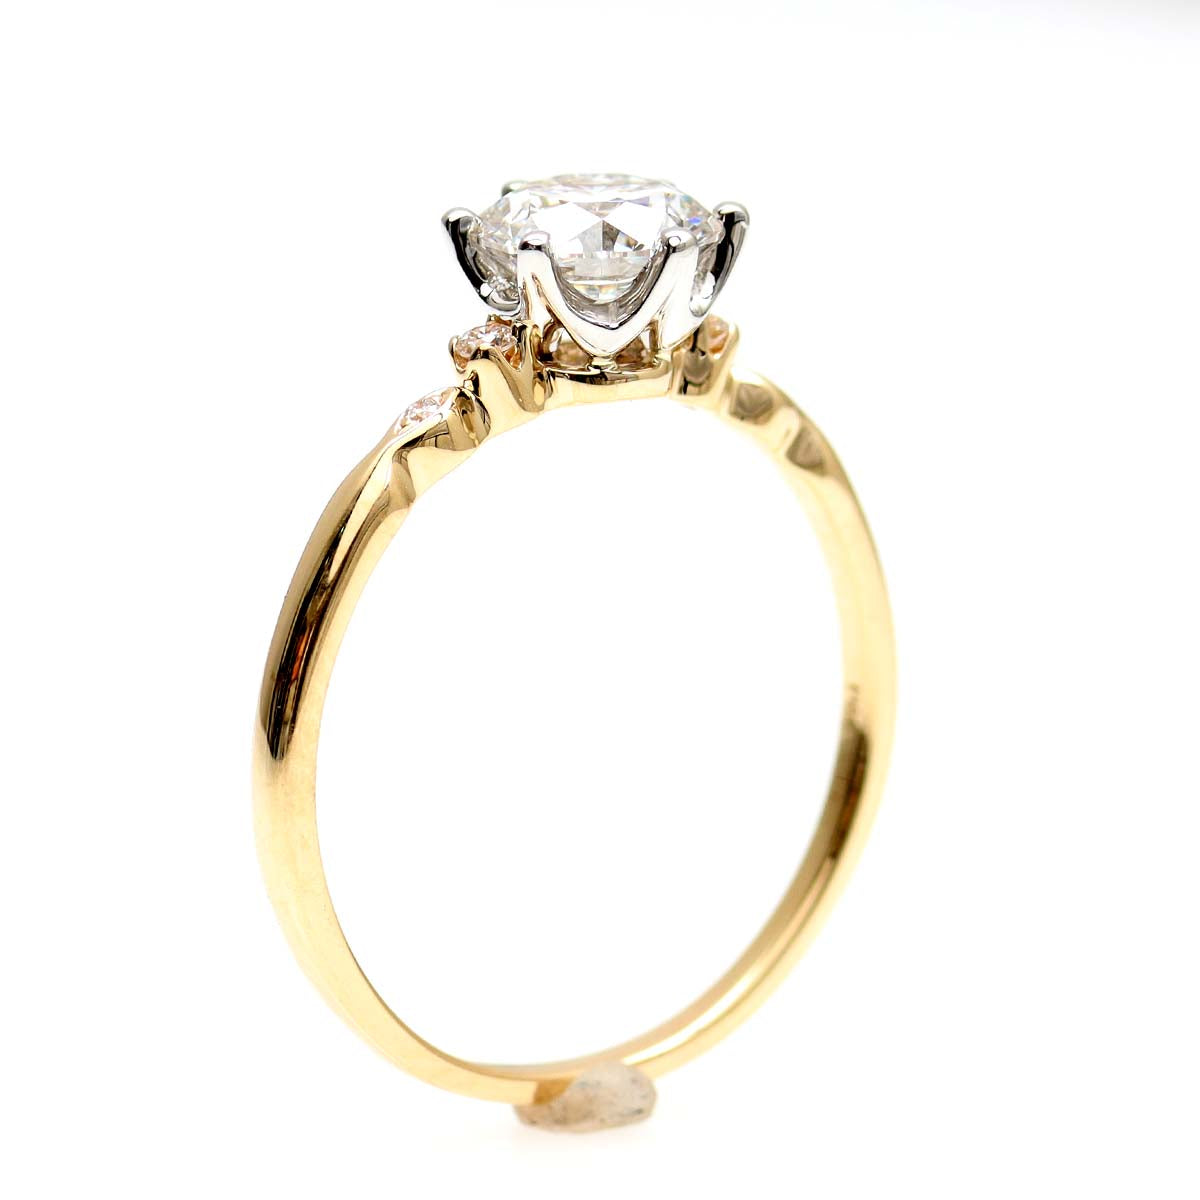 The Cordelia Replica Art Deco Engagement Ring #3510-5